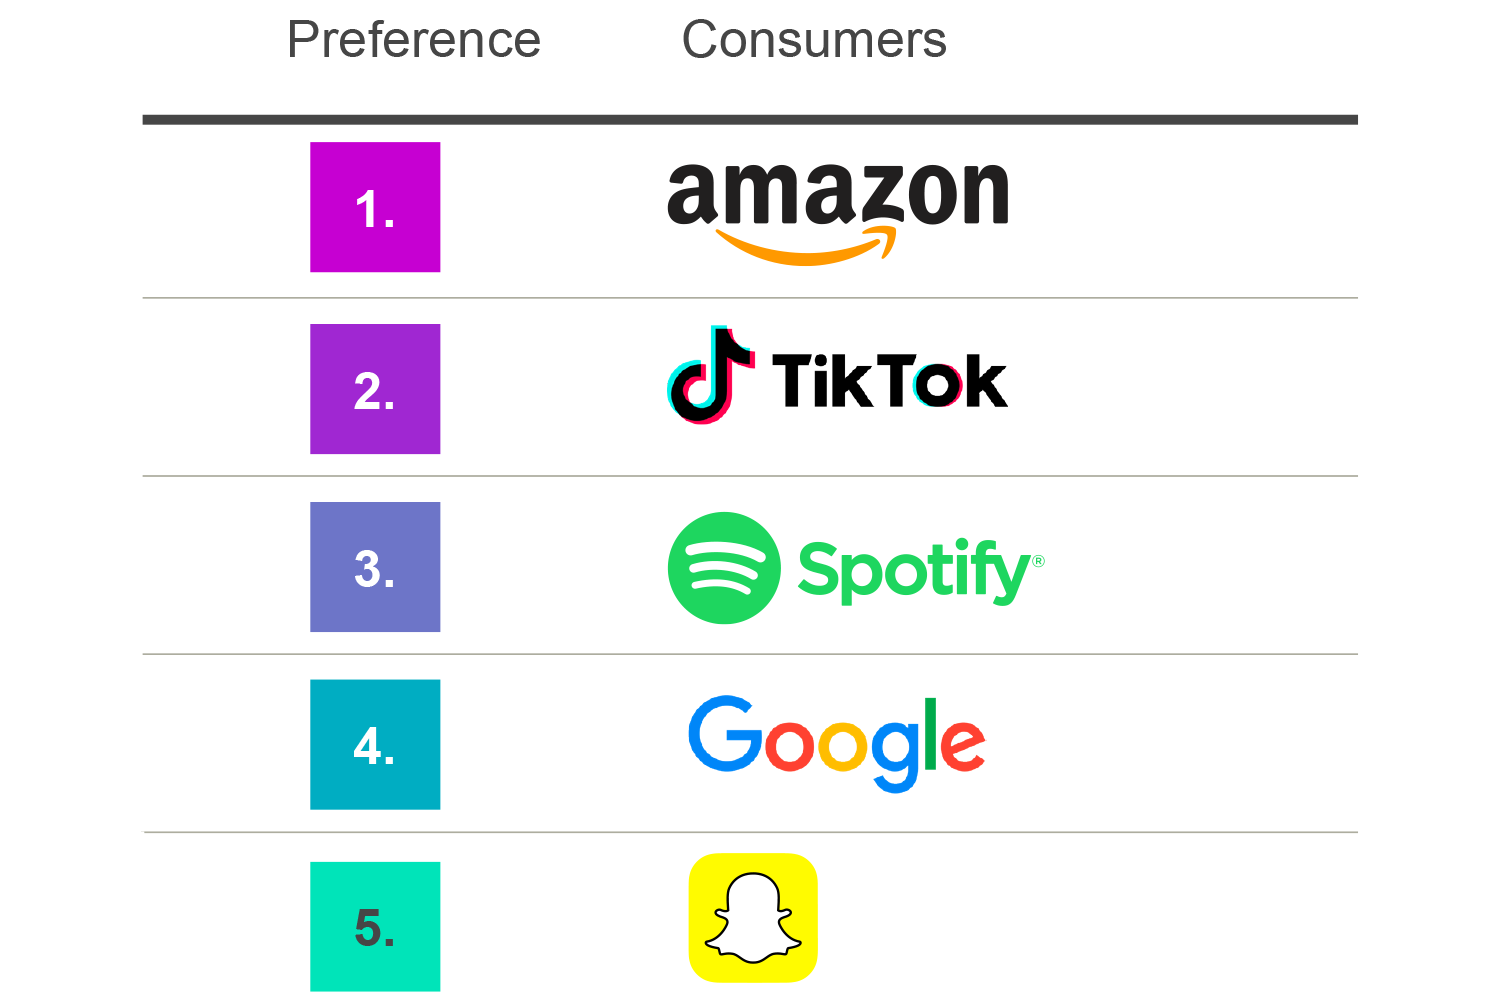 Top ranking media brands